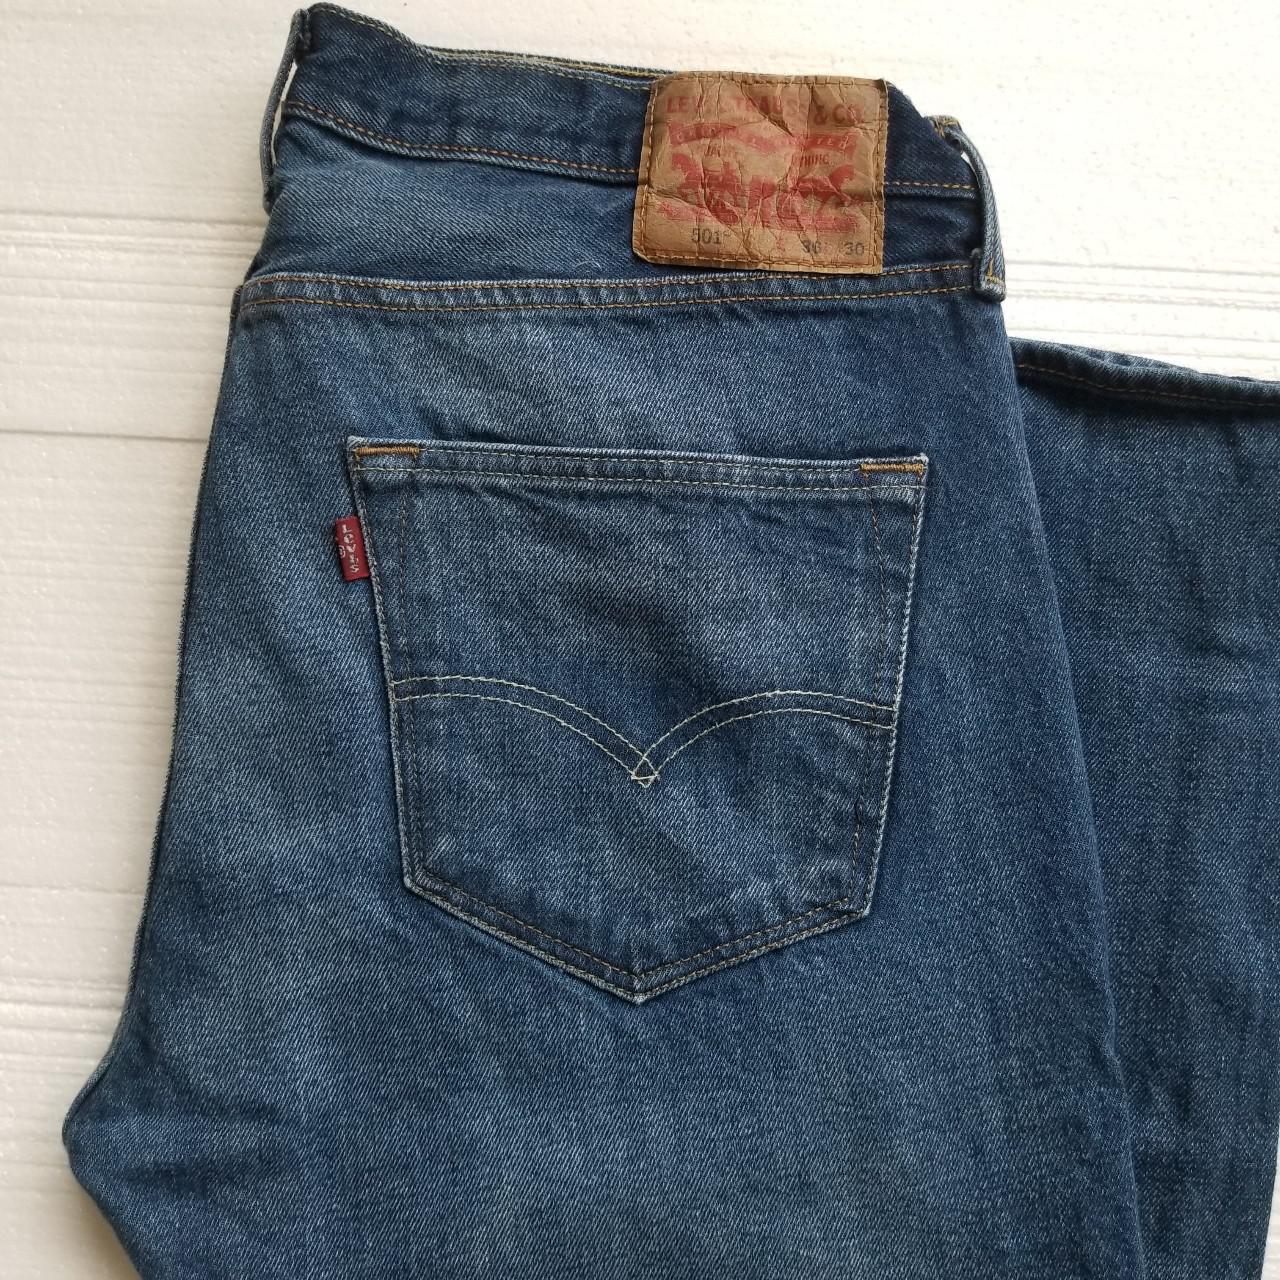 Levis 501 Straight Leg 36x30 Blue Jeans Original Depop 5178